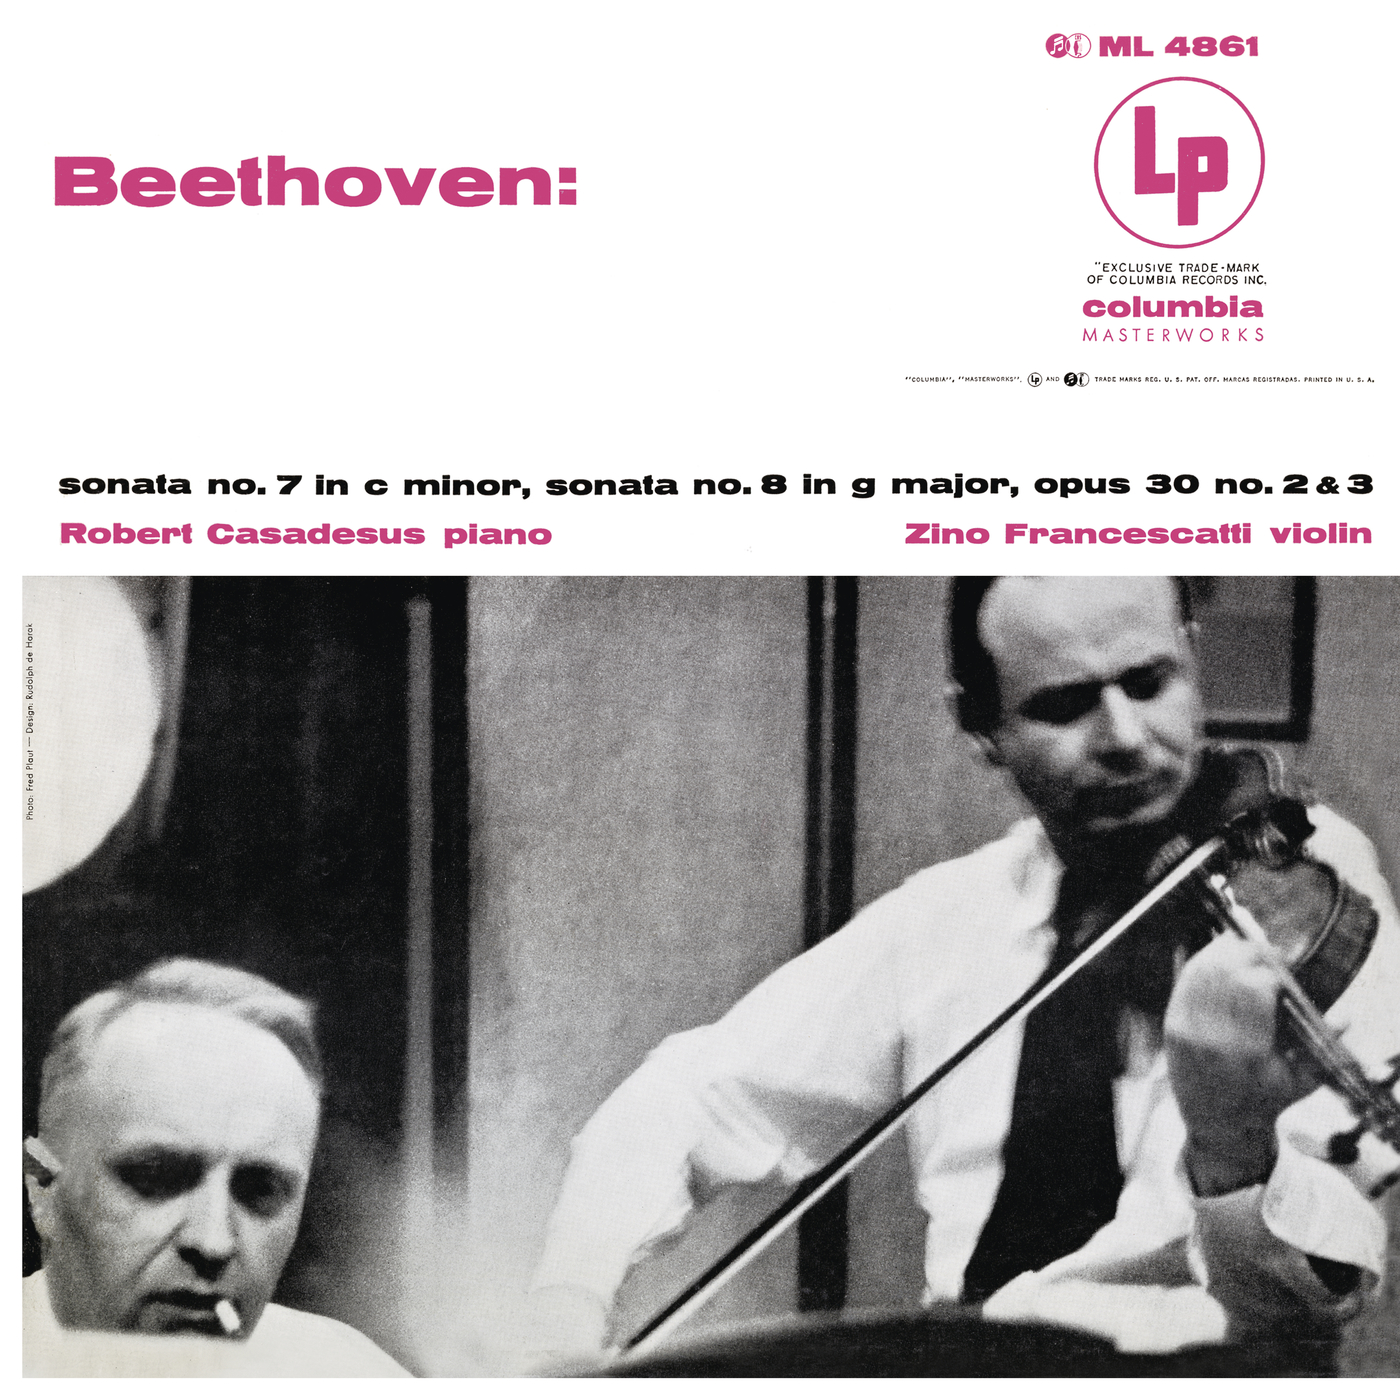 Beethoven: Violin Sonatas 7 & 8 (Remastered)